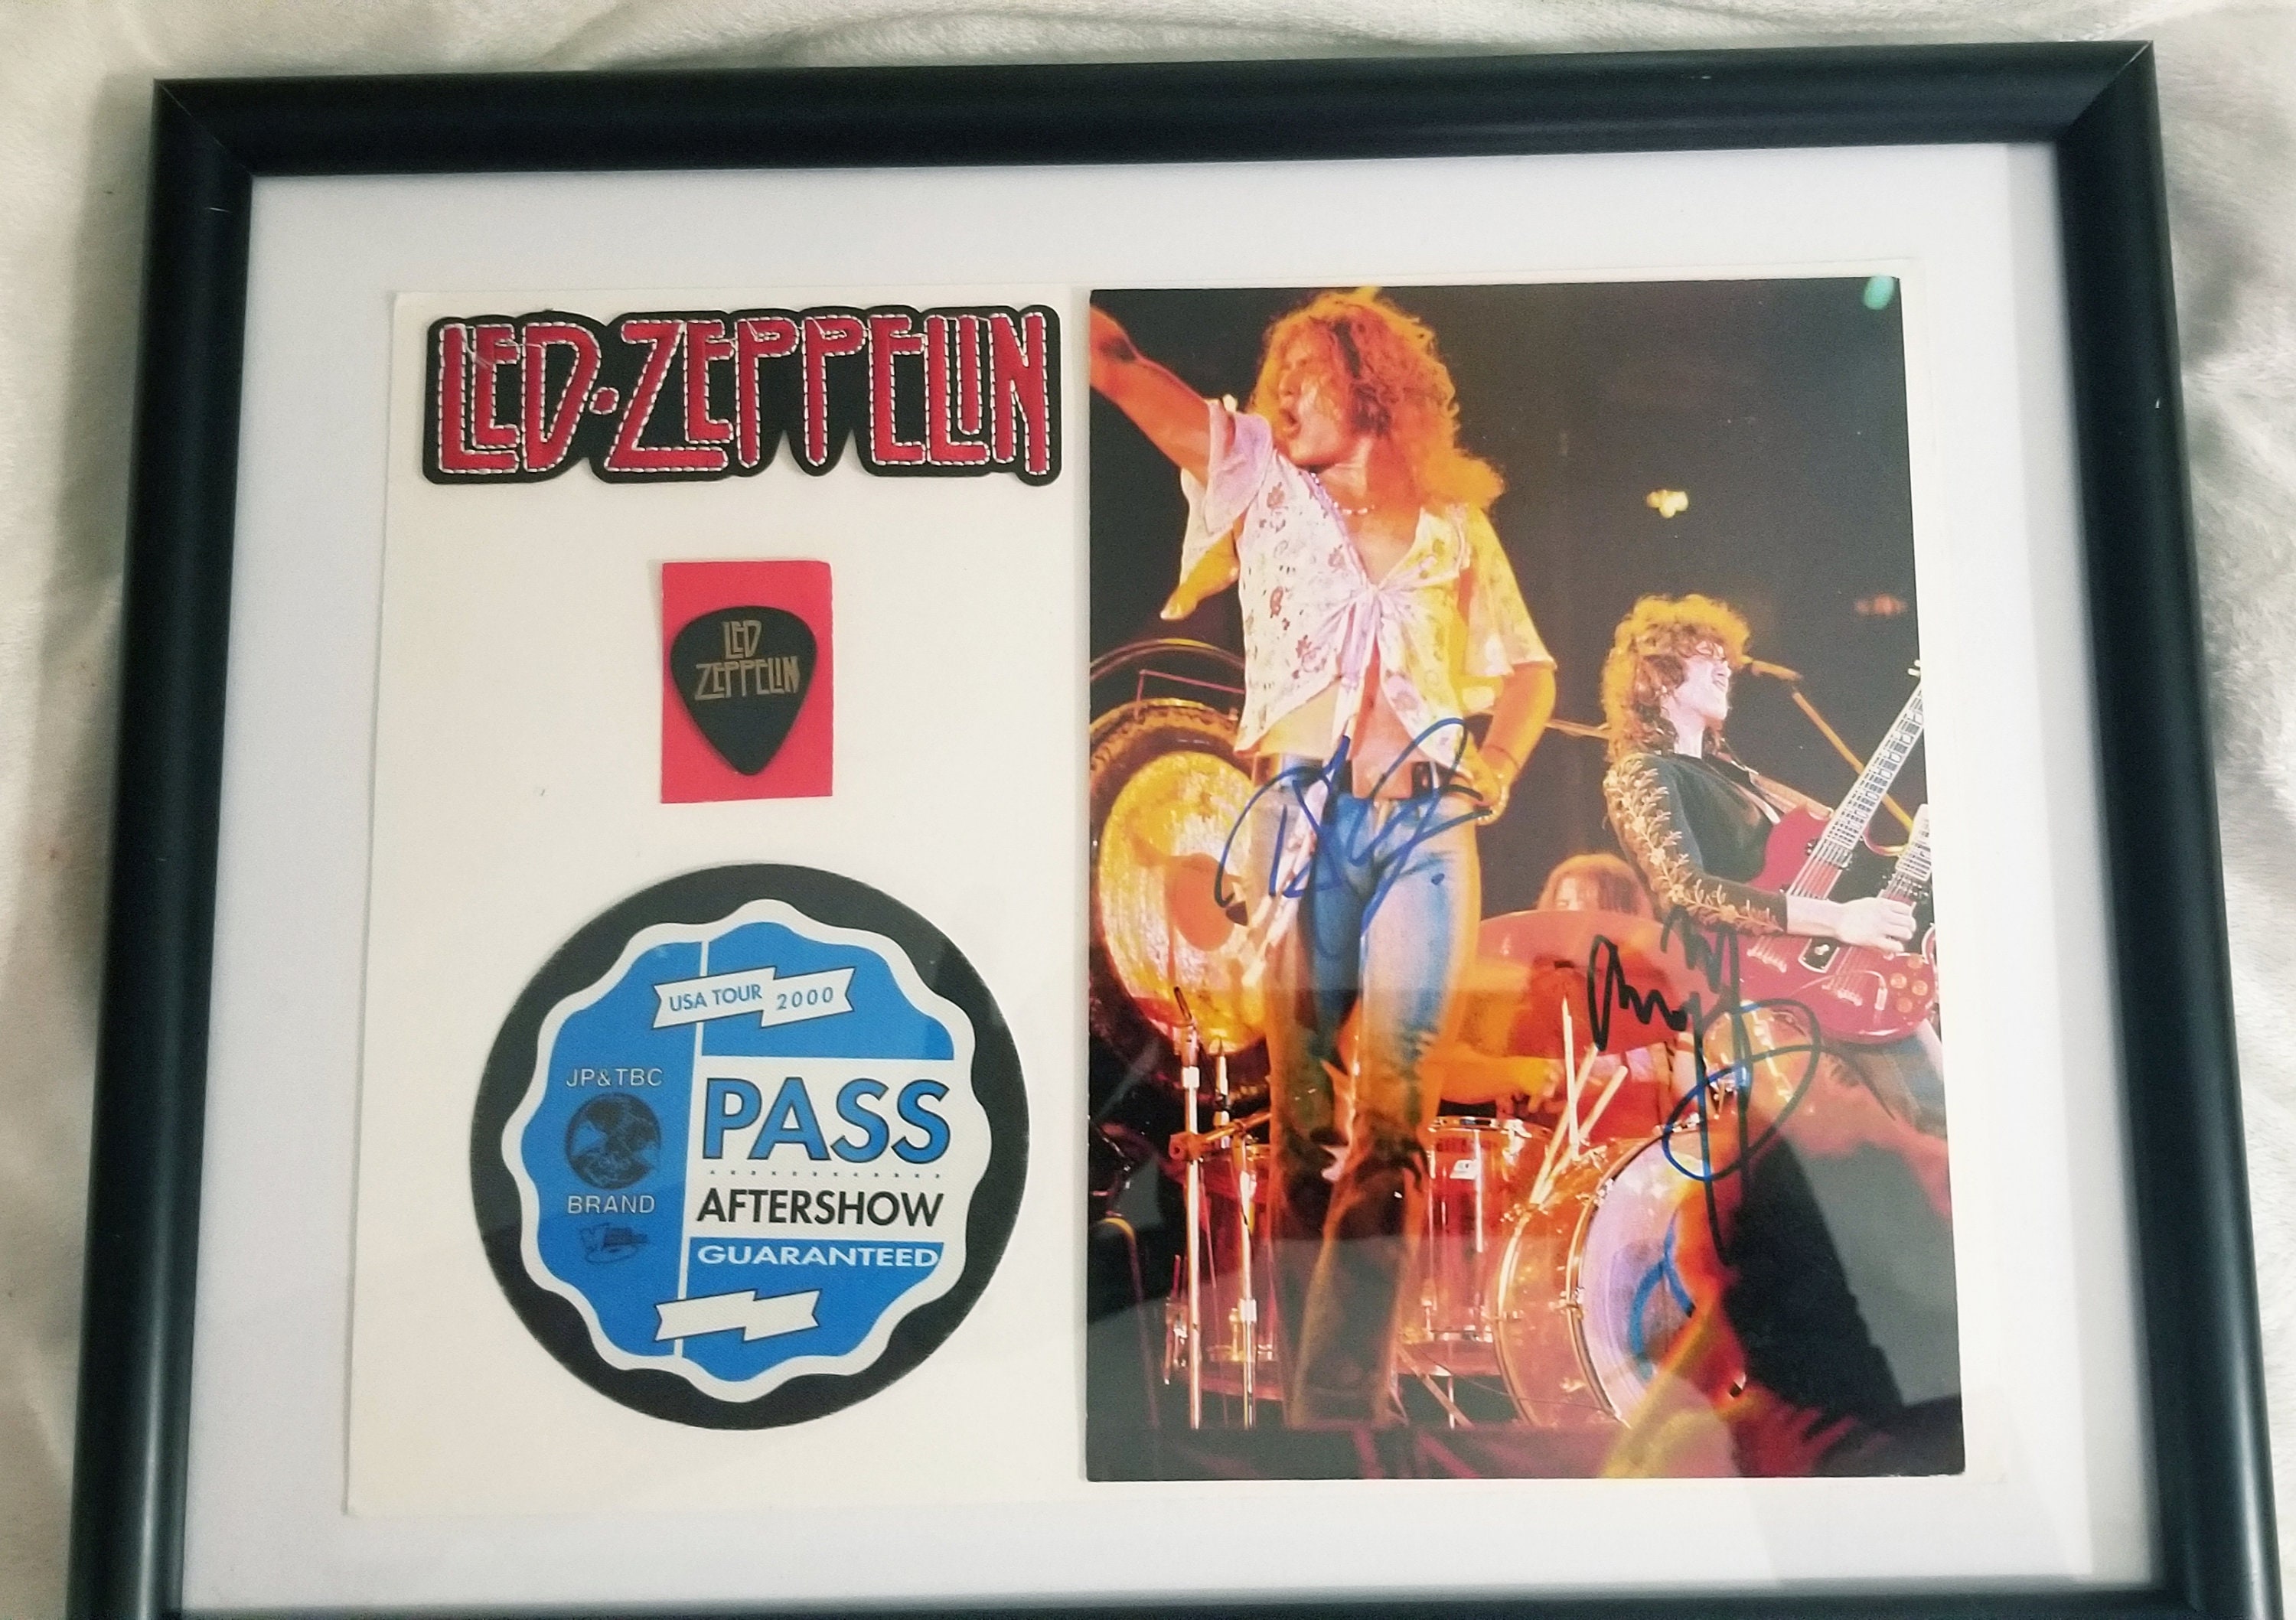 Robert Plant Signed Autograph Led Zeppelin Swan Song Framed Cd Display -  Jsa Coa